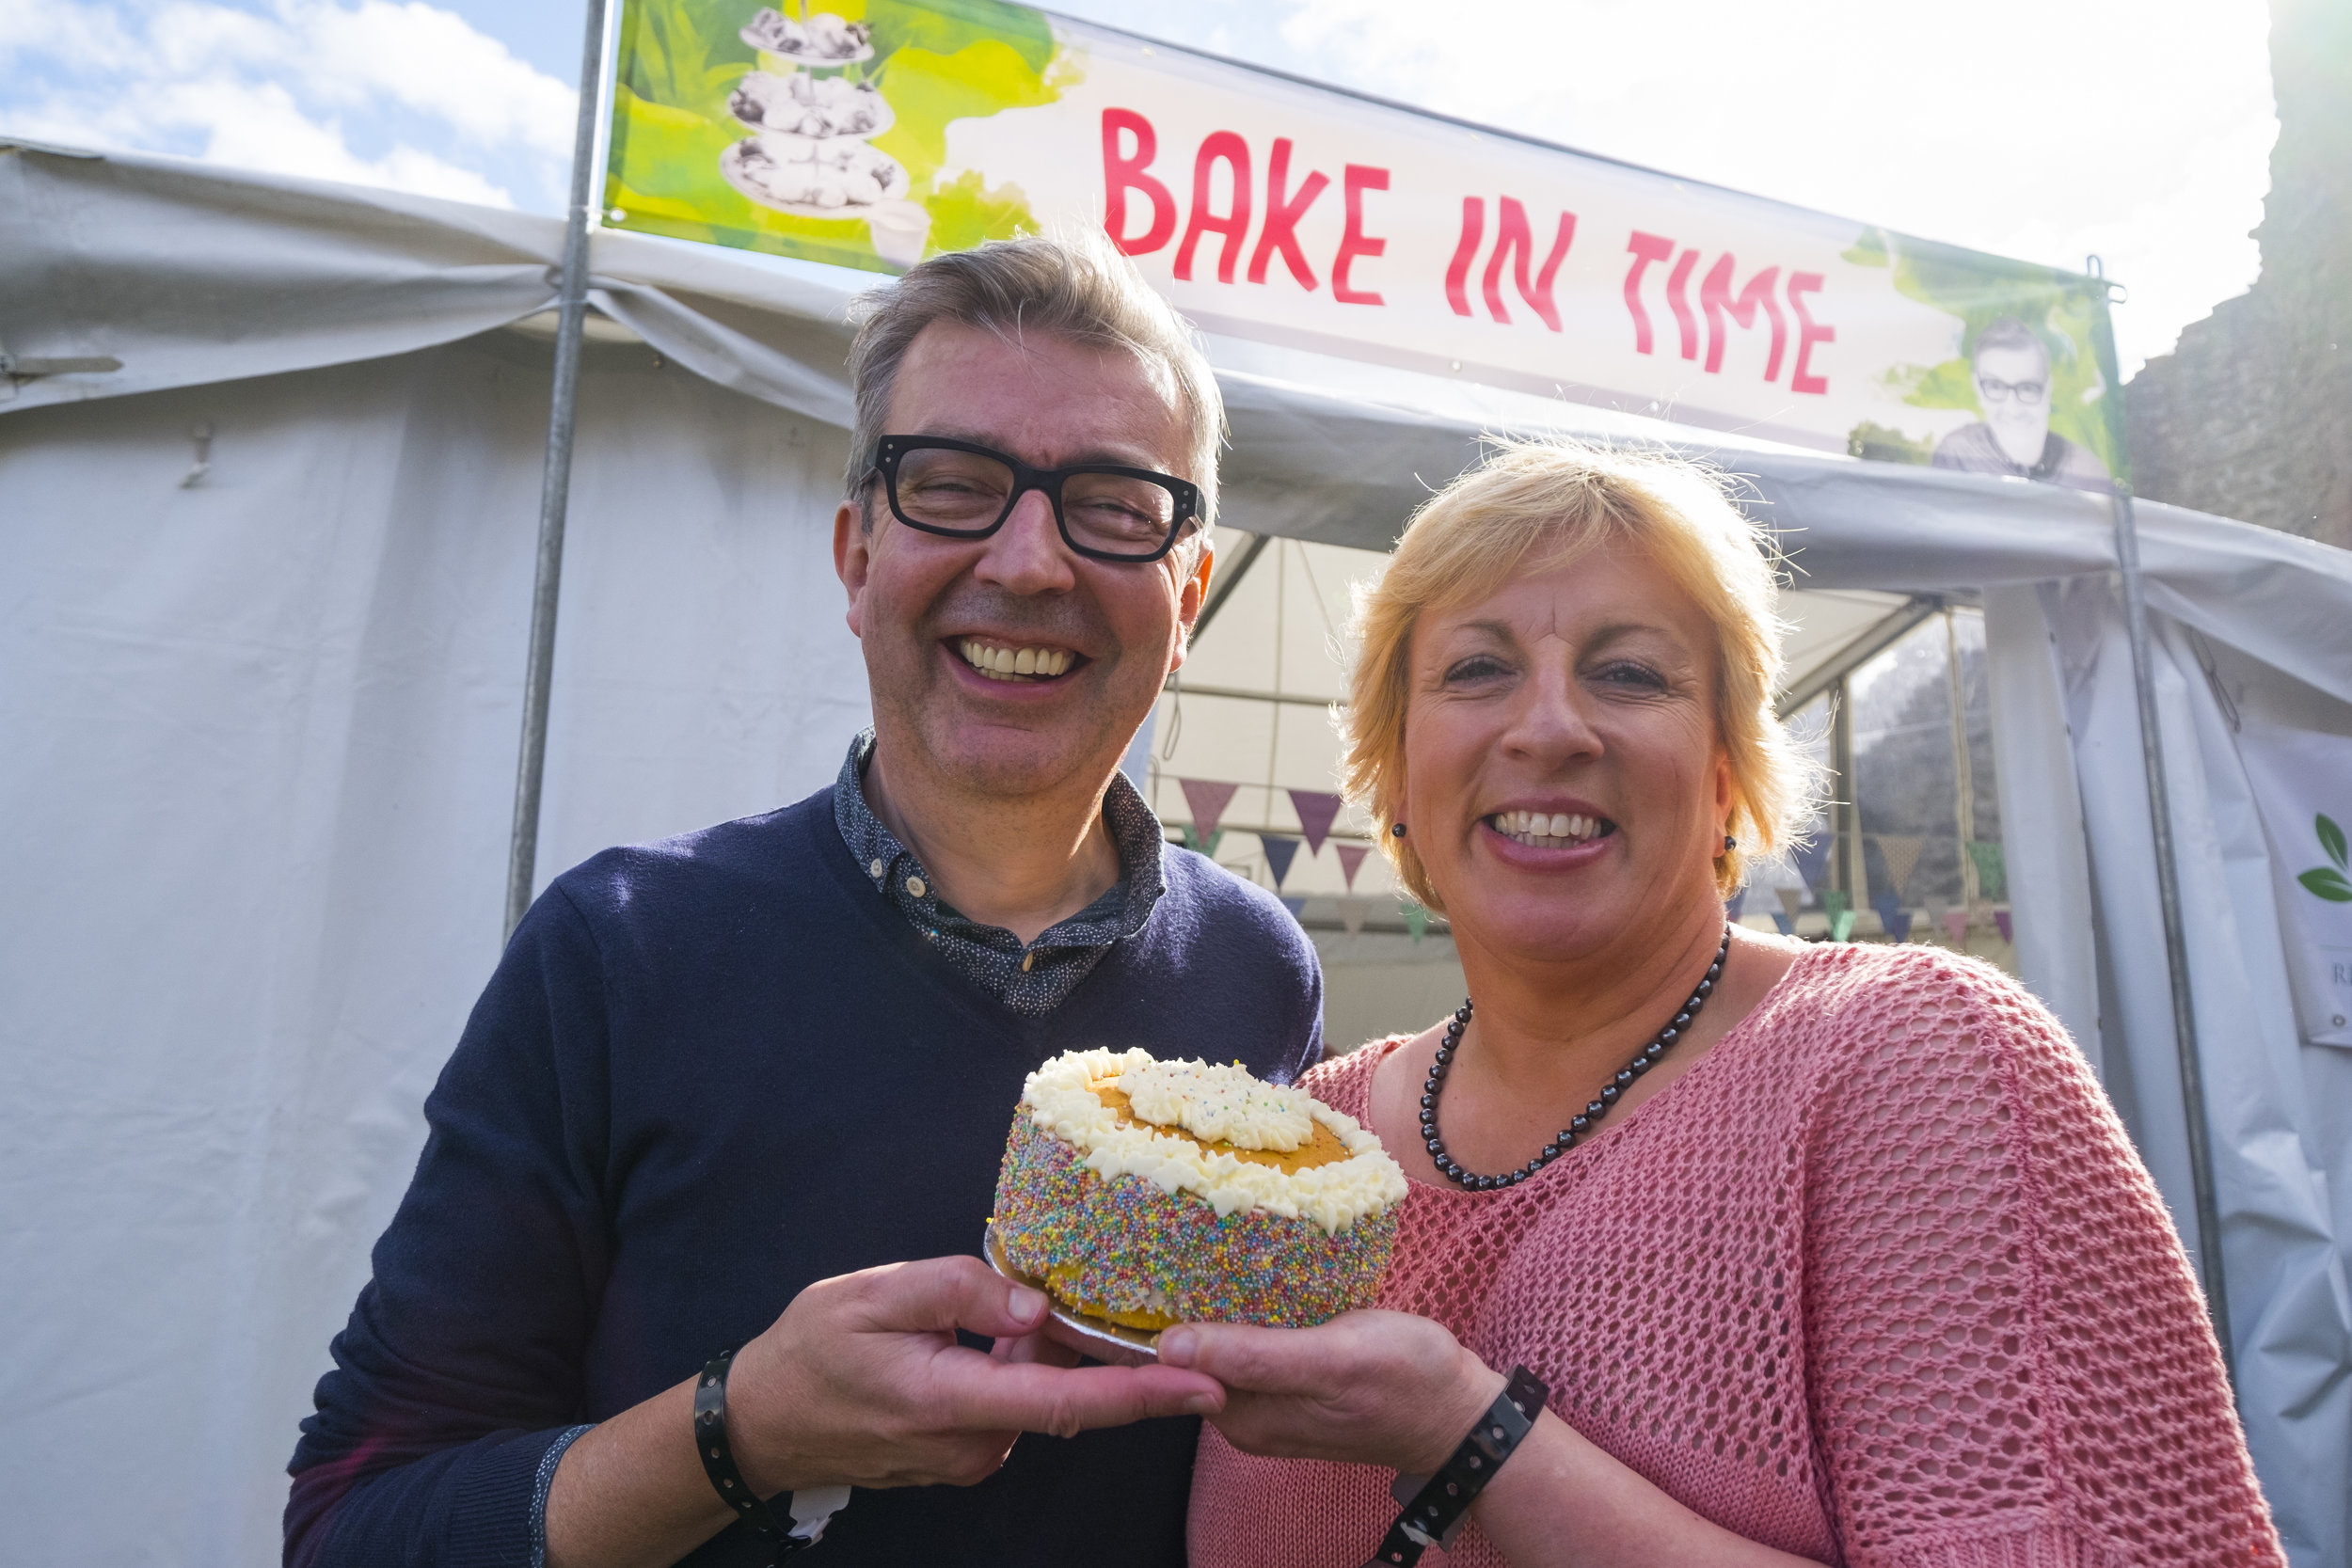  Howard Middleton, Sandy Docherty, Bake in Time Stage, Ludlow 2017 Food Festival. 